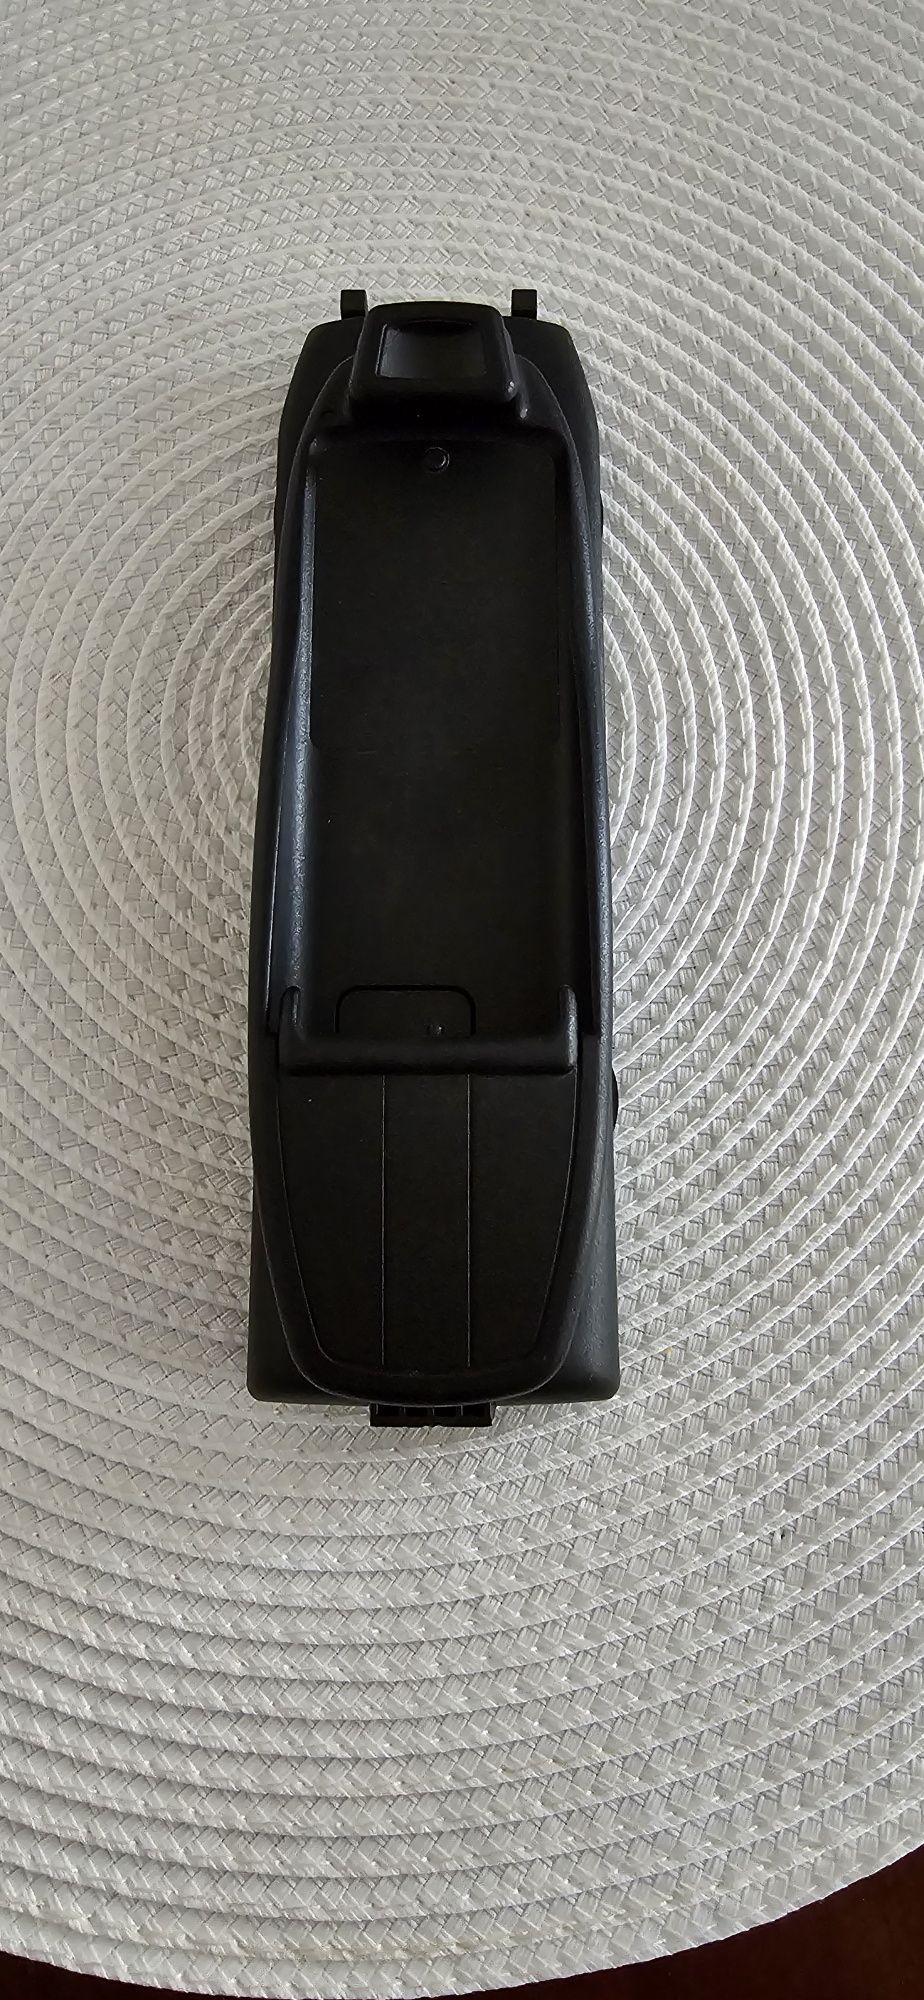 Oryginalny Adapter Snap-In BMW E46 E39 Nokia